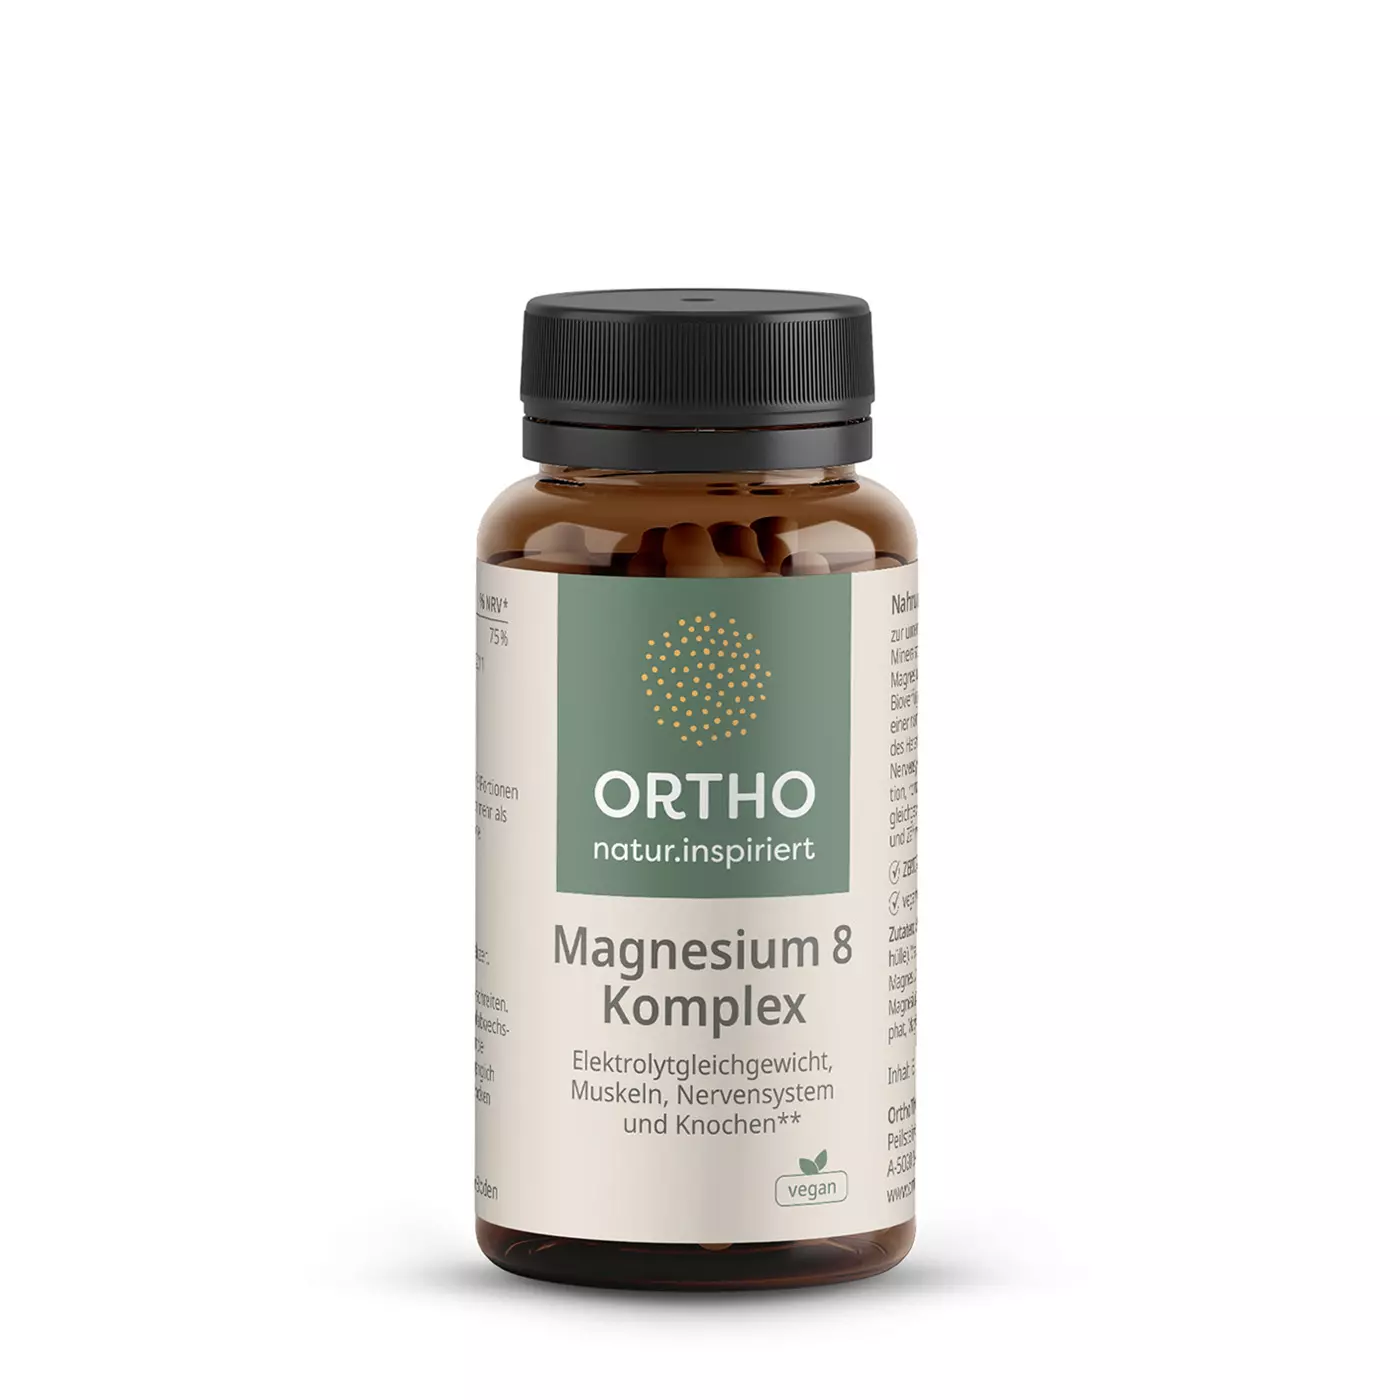 OrthoTherapia Magnesium 8 Komplex